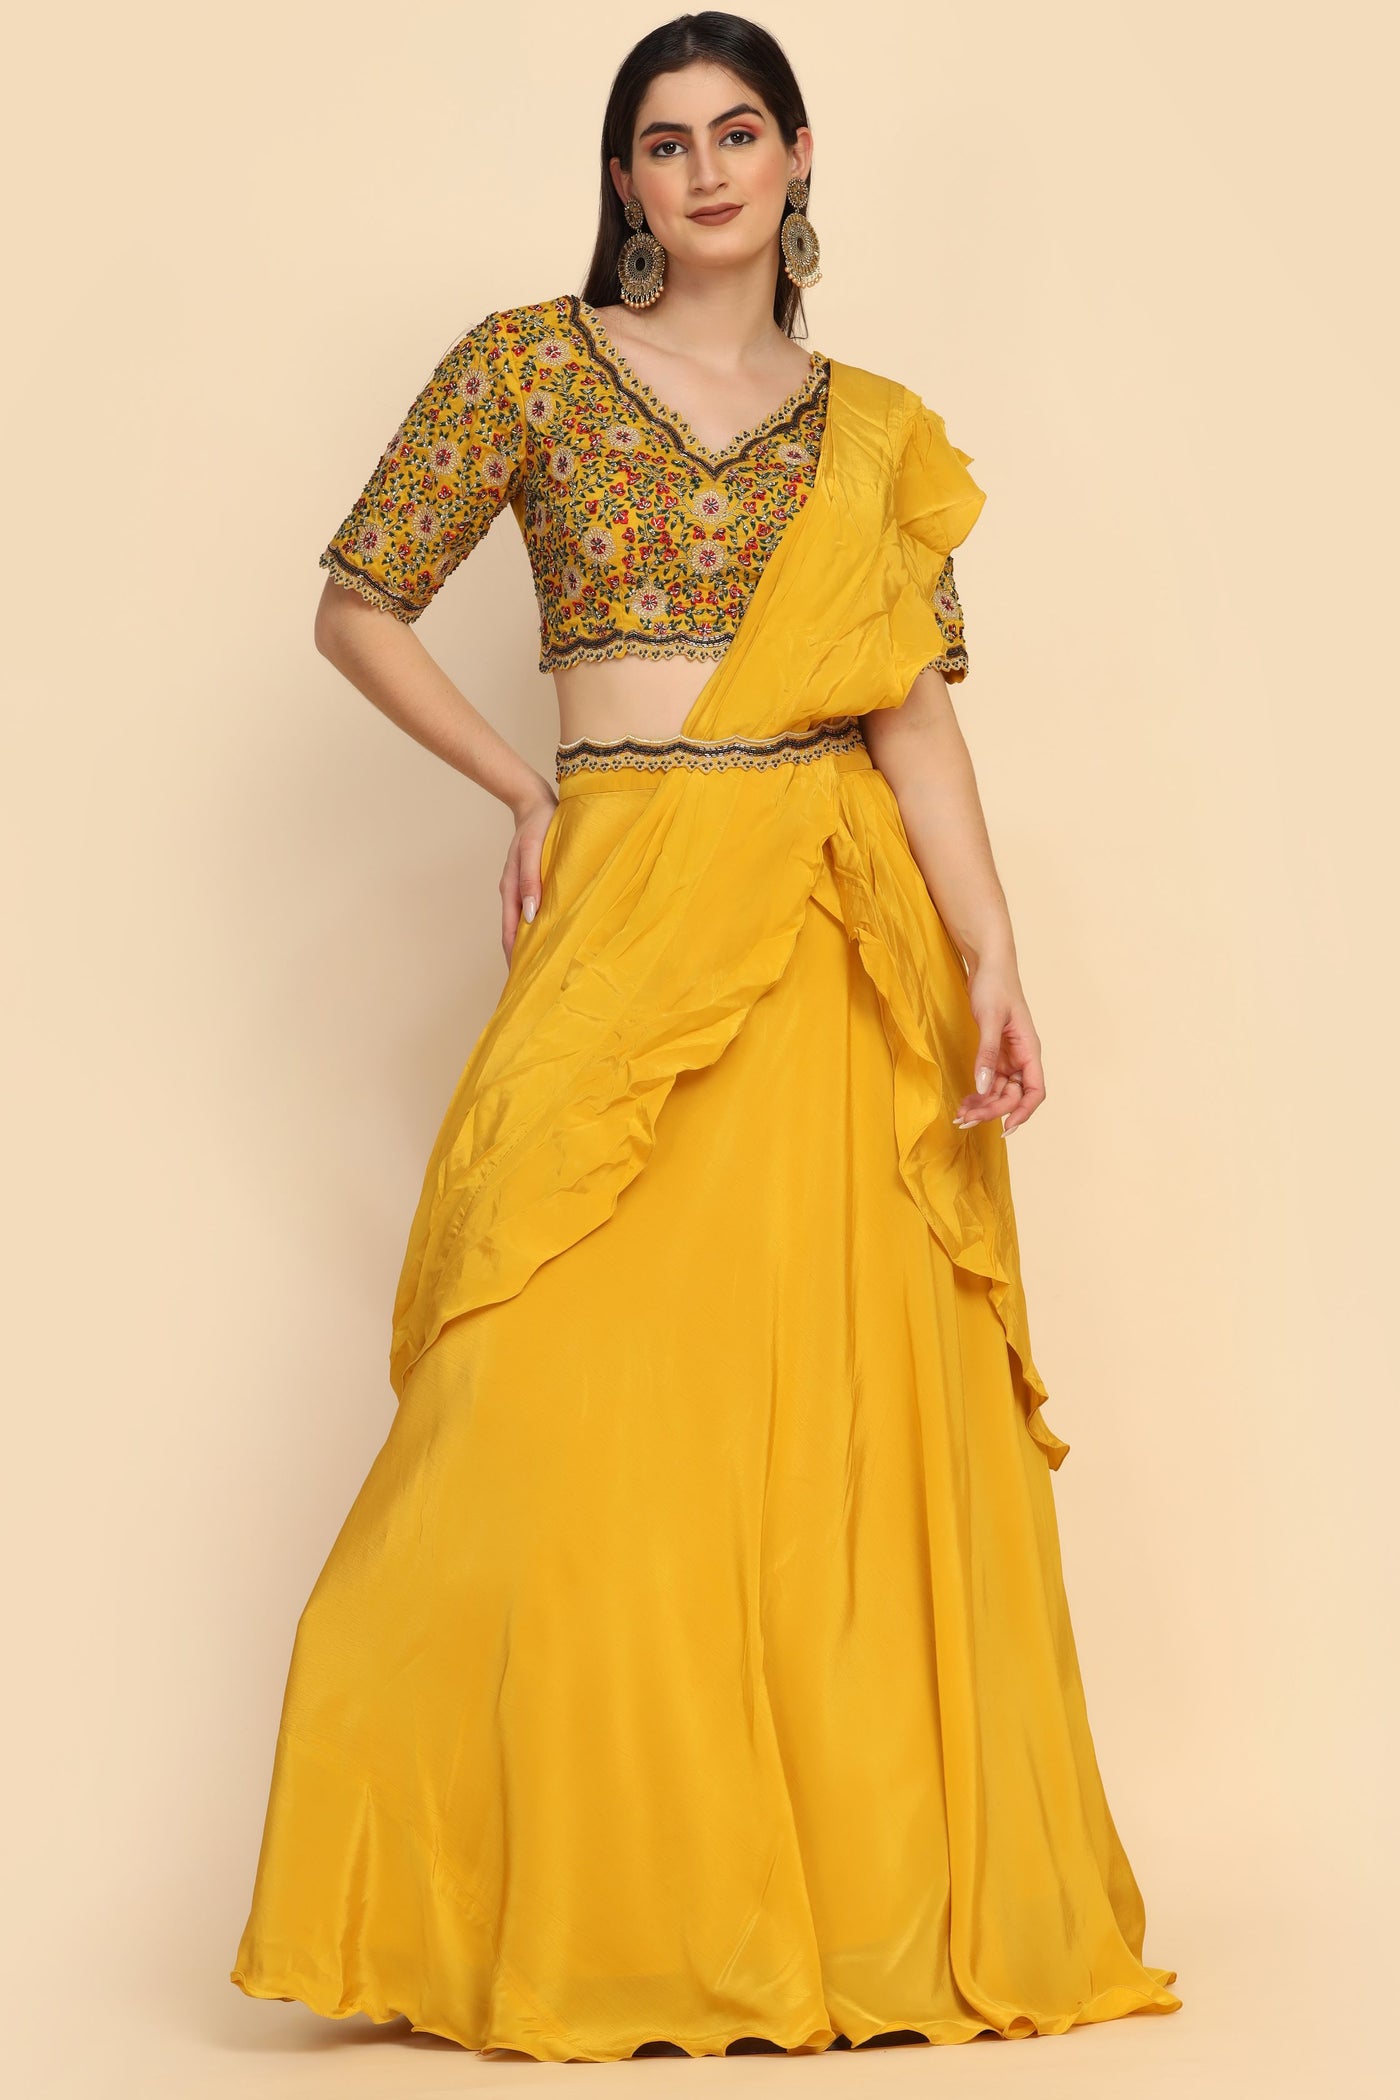 Elegant Yellow color drape Dress